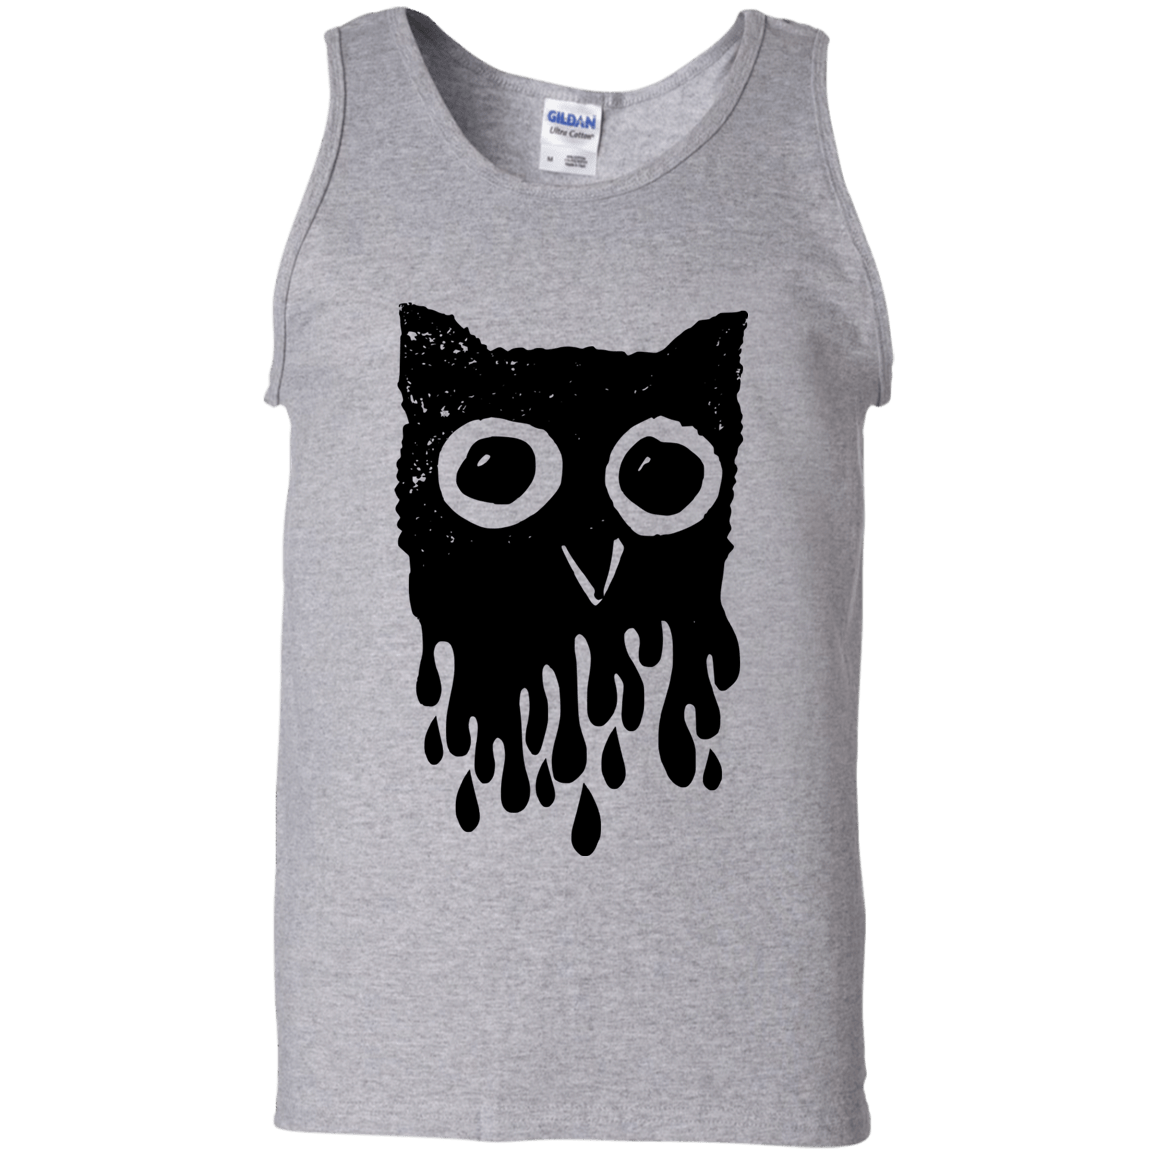 T-Shirts Sport Grey / S Dripping Owl Men's Tank Top